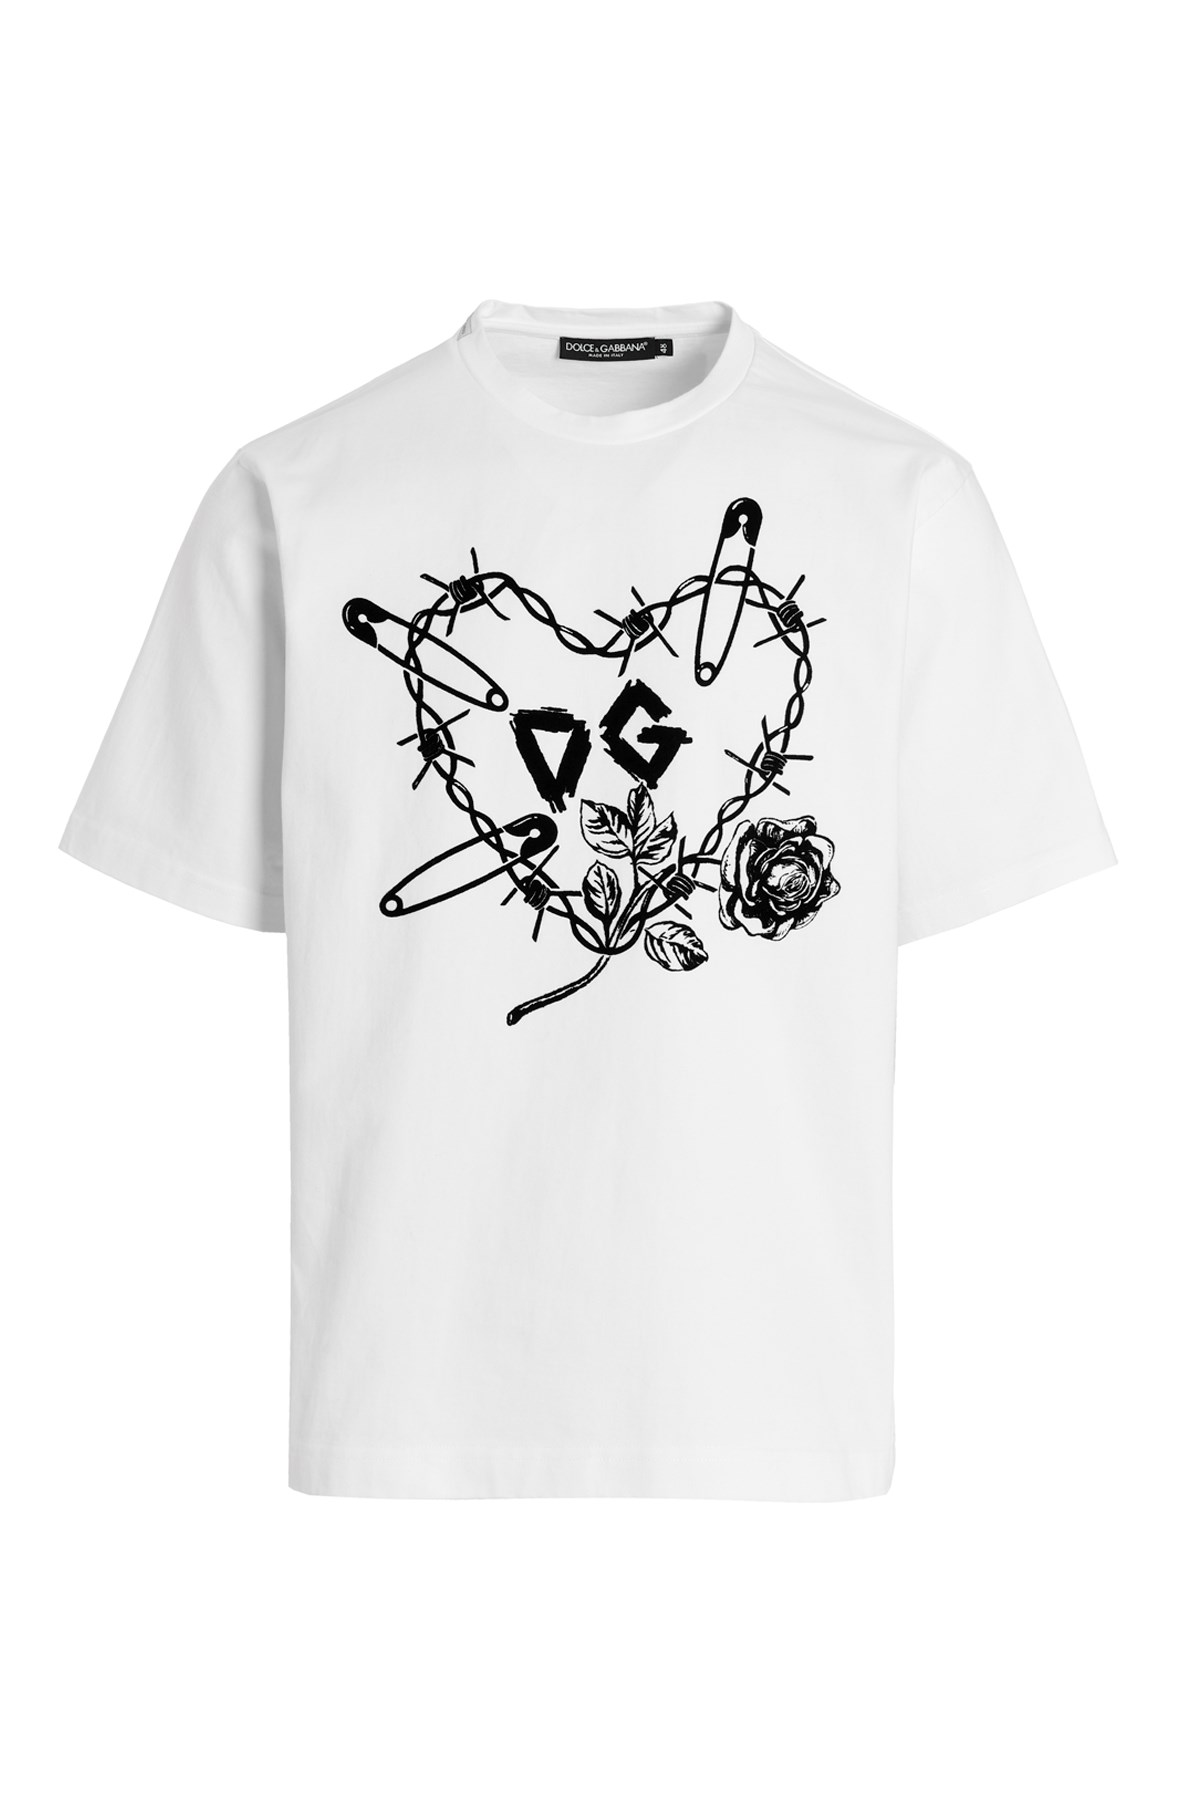 DOLCE & GABBANA 'Dg Cuore Spinoso’ T-Shirt